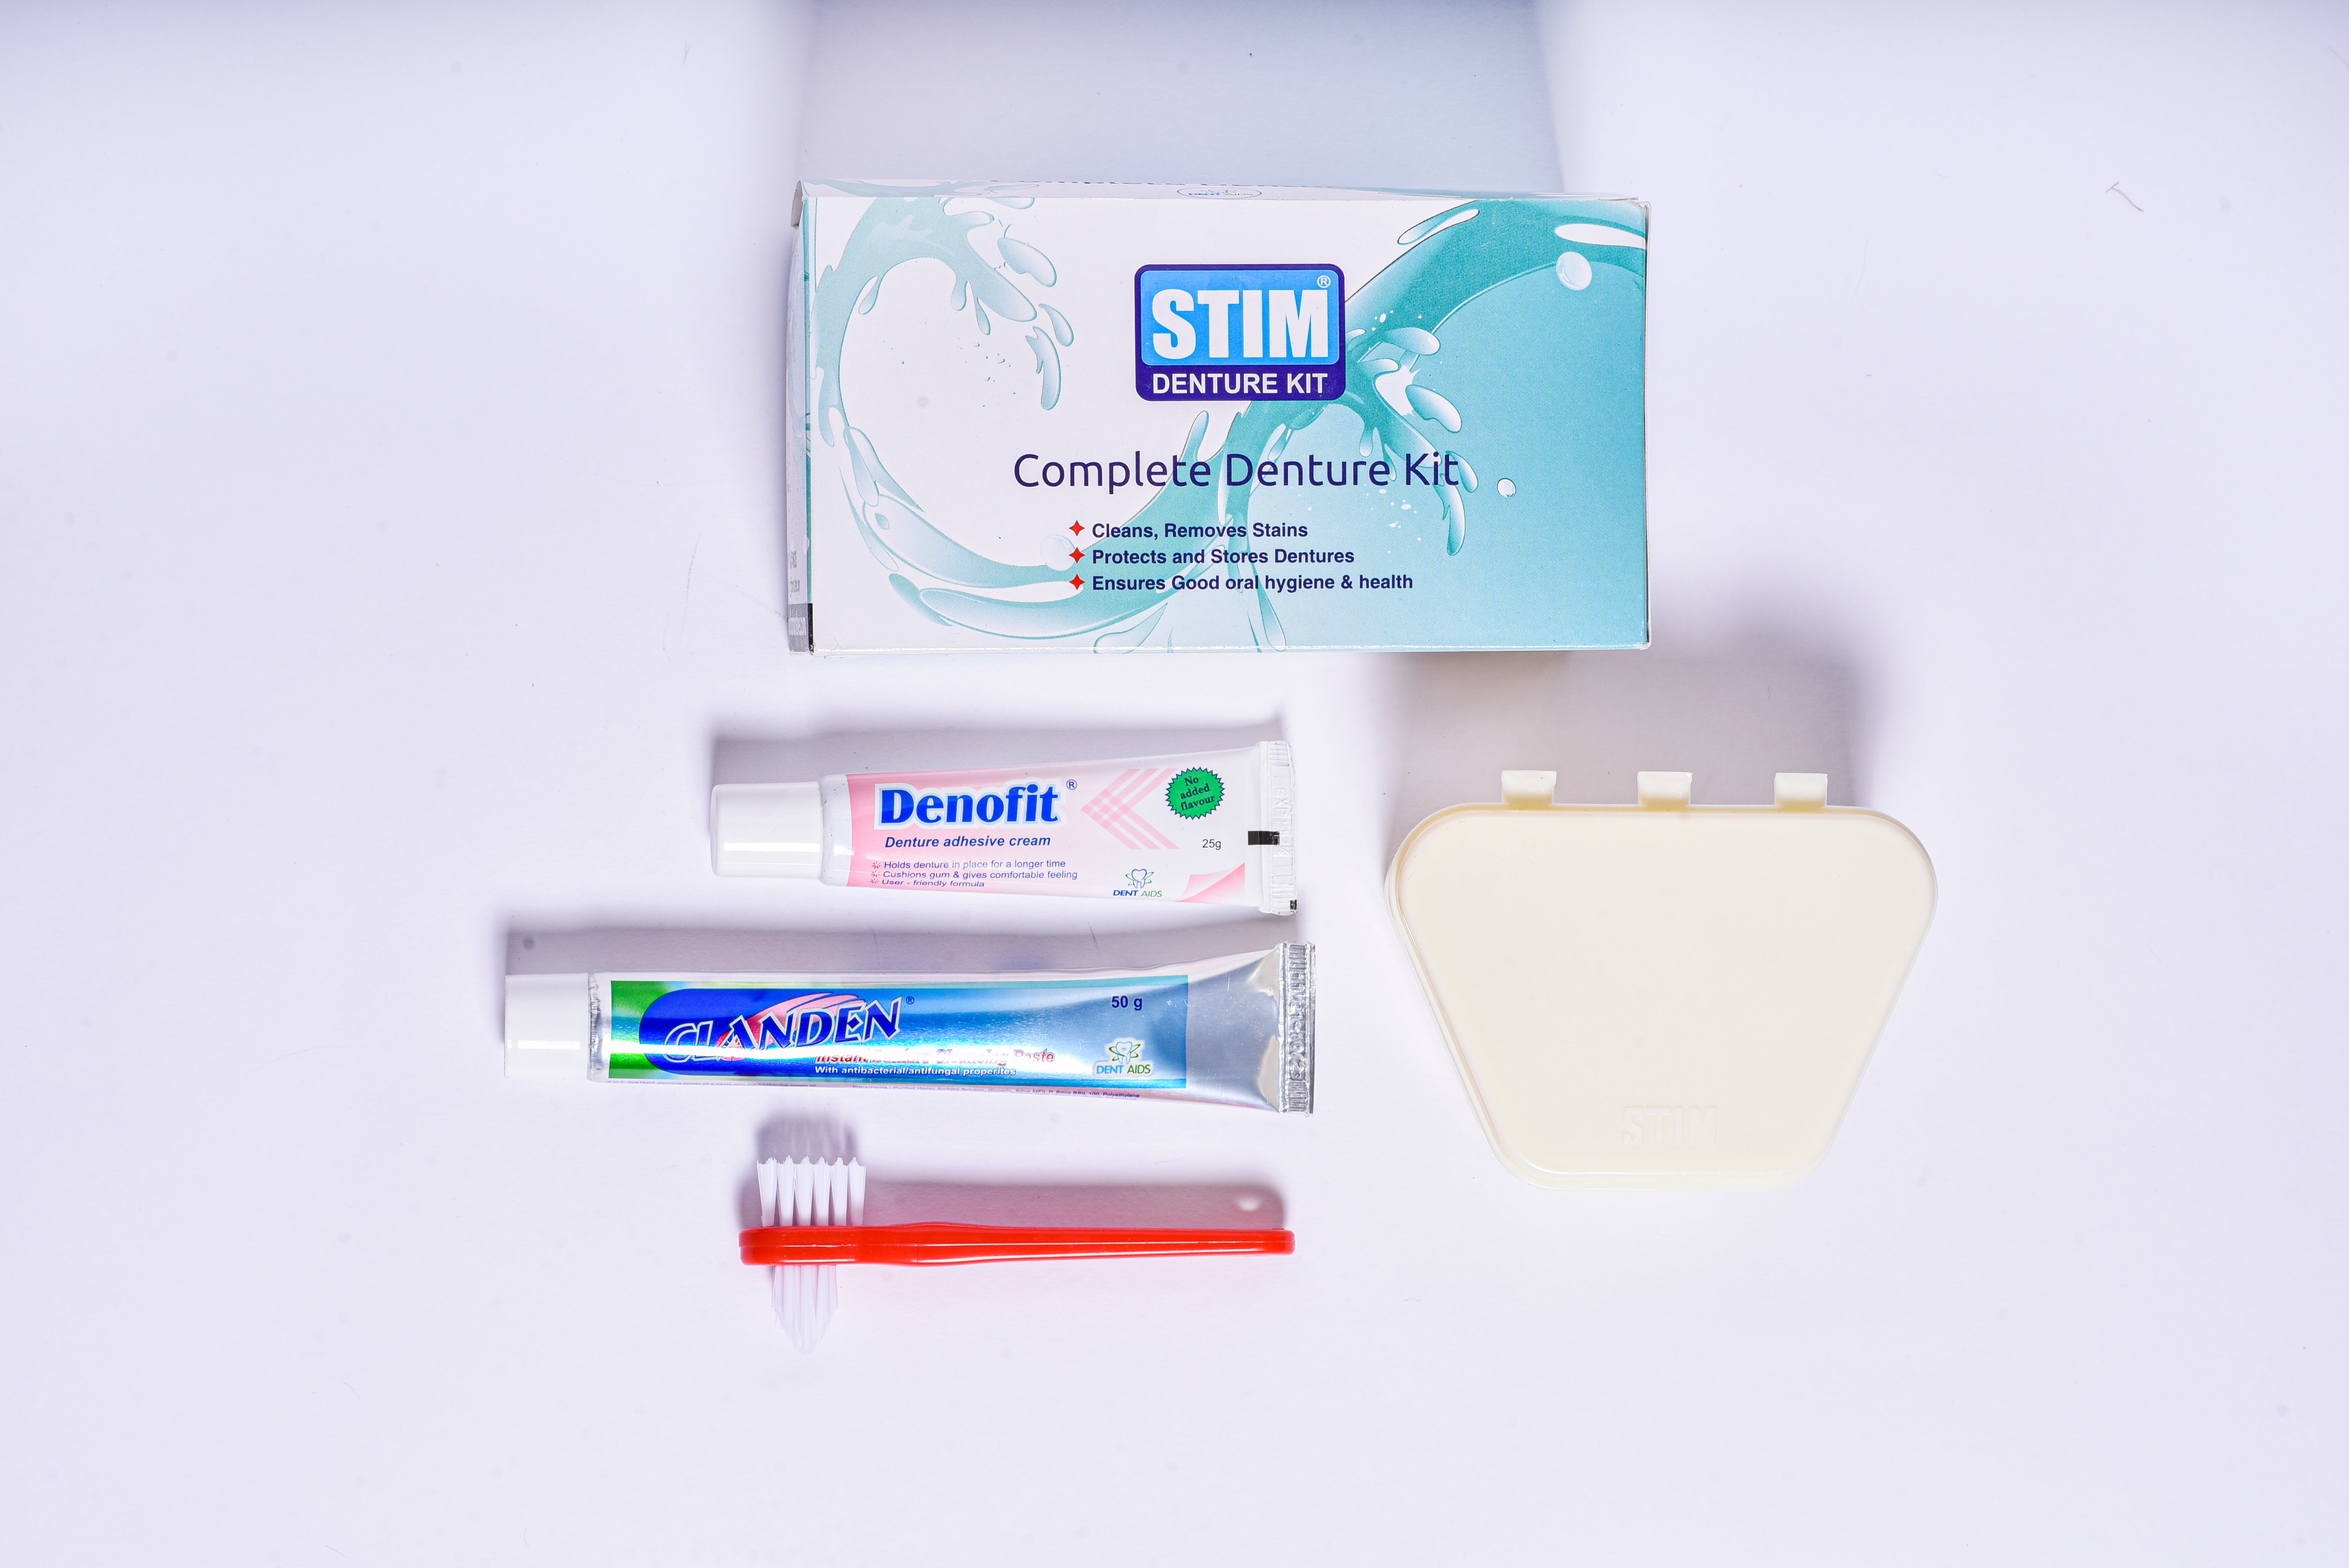 STIM Denture Kit - Complete Denture Kit